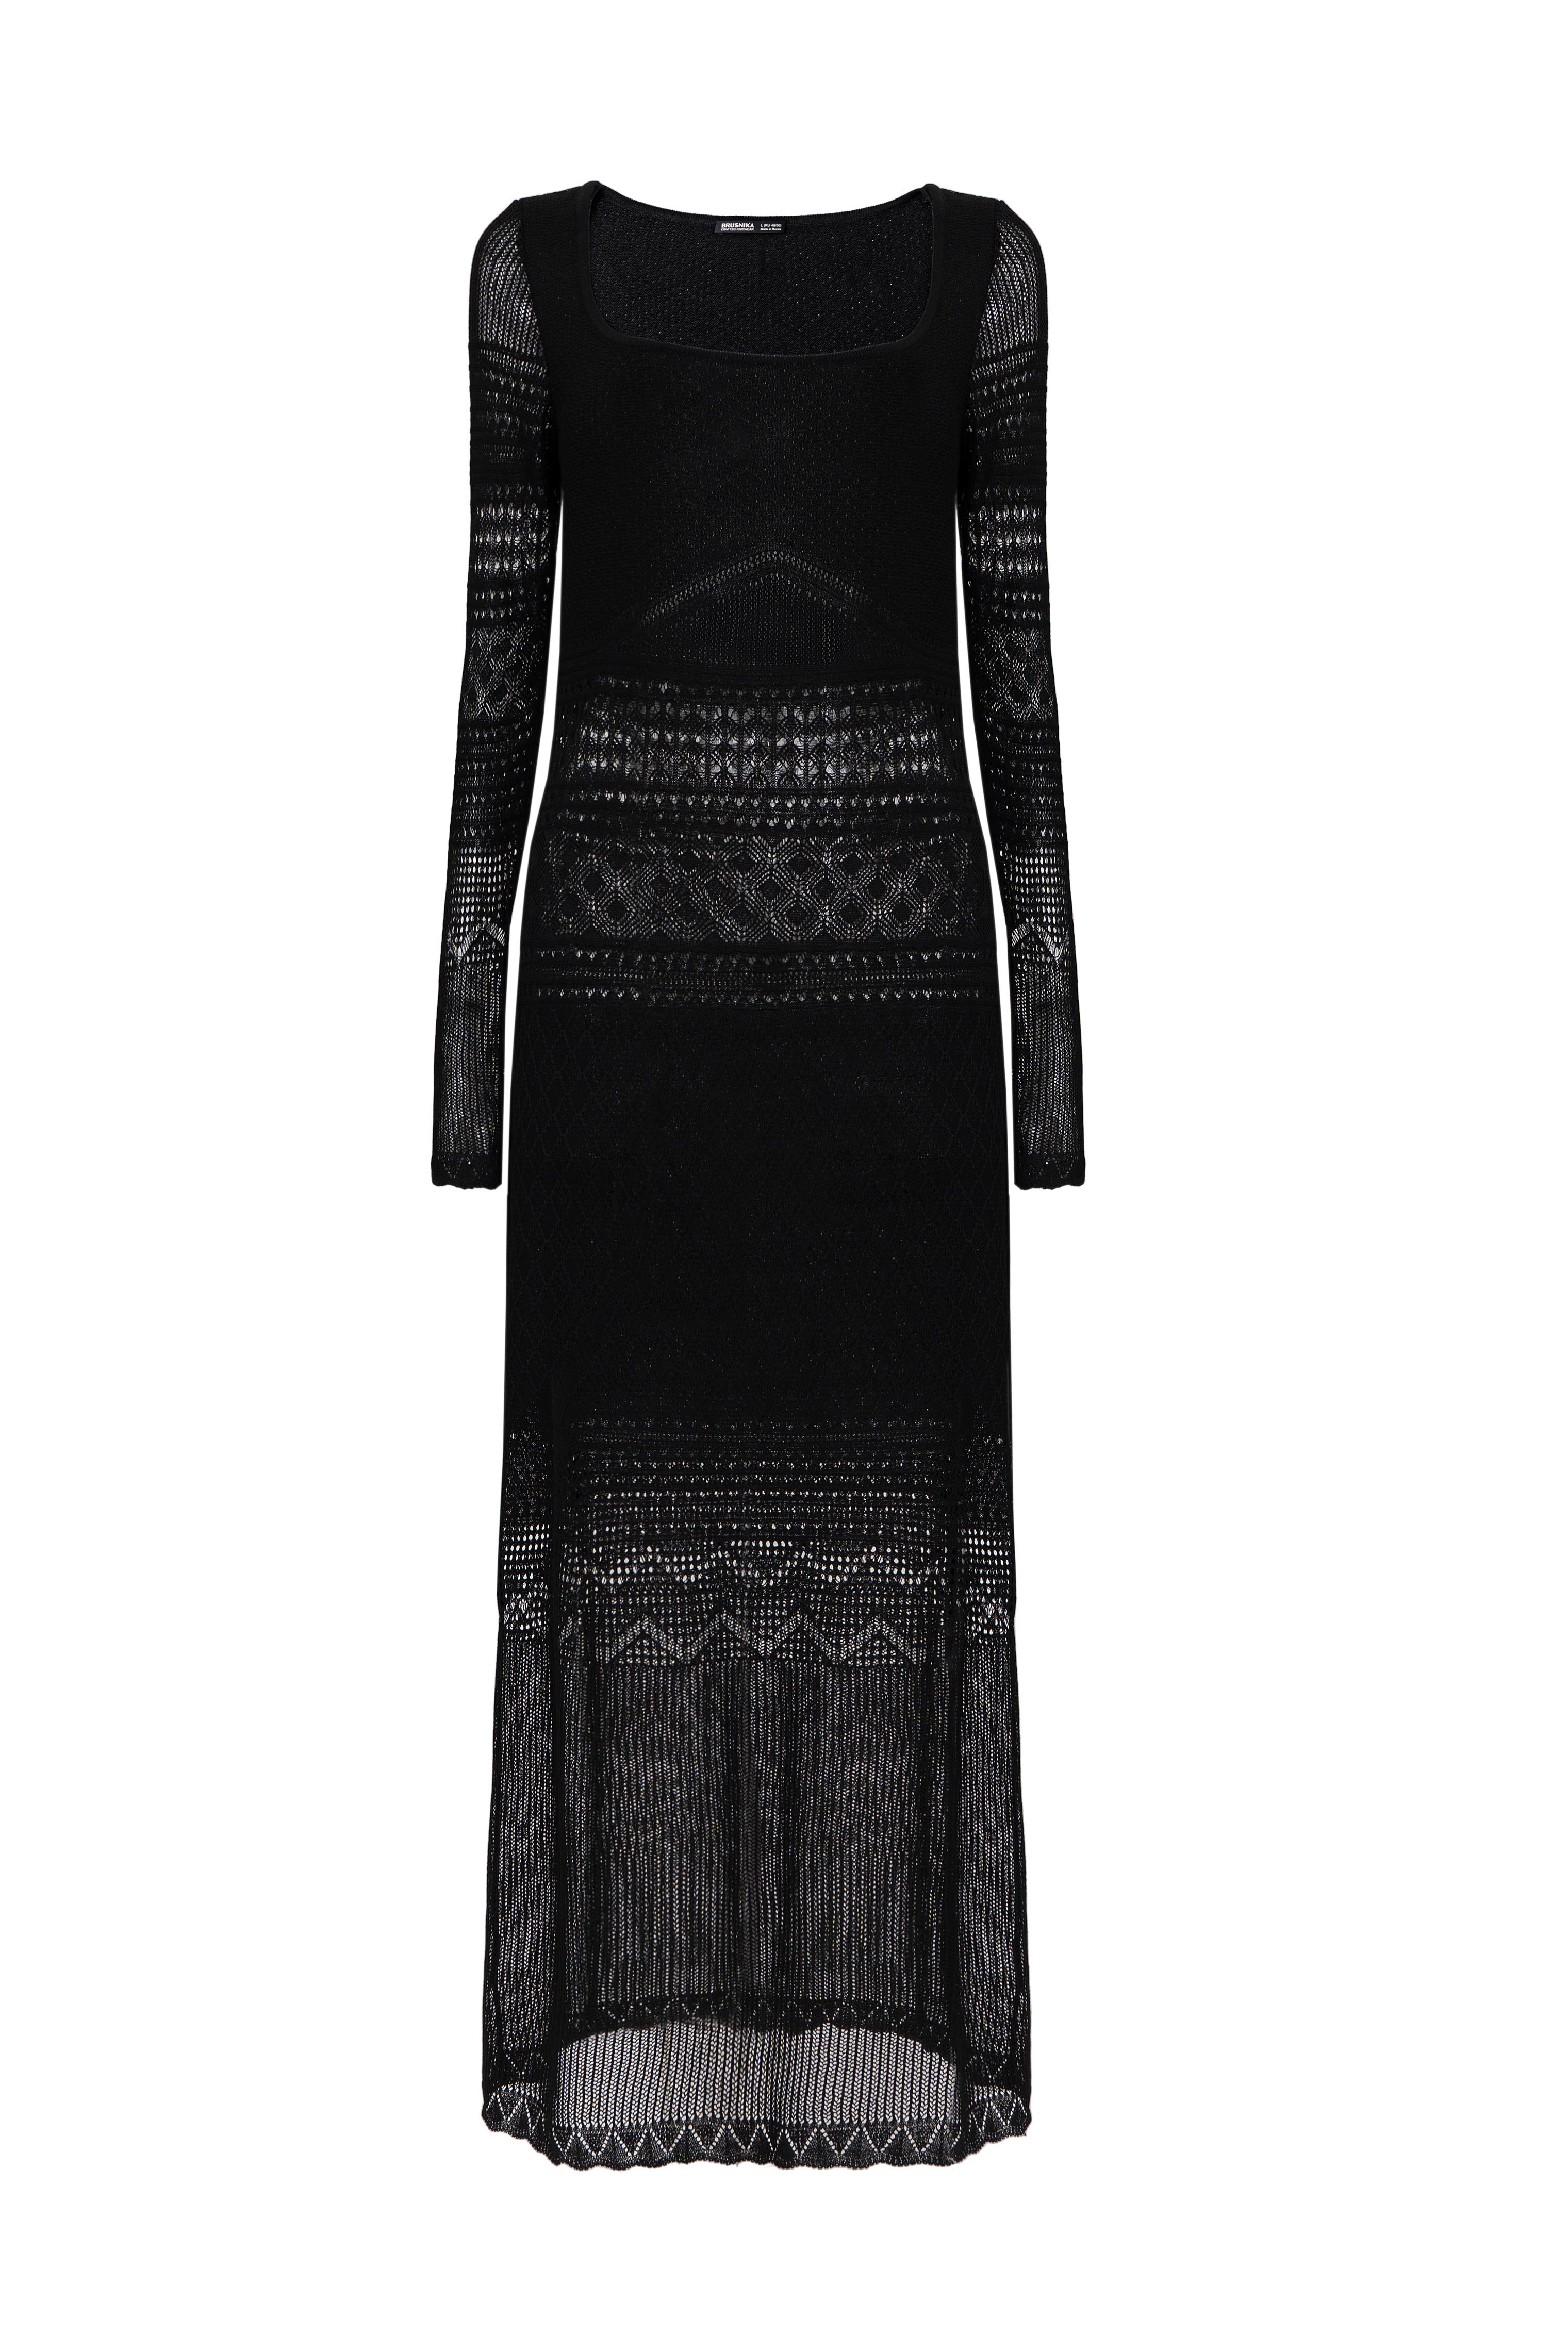 Dress 4672-01 Black from BRUSNiKA